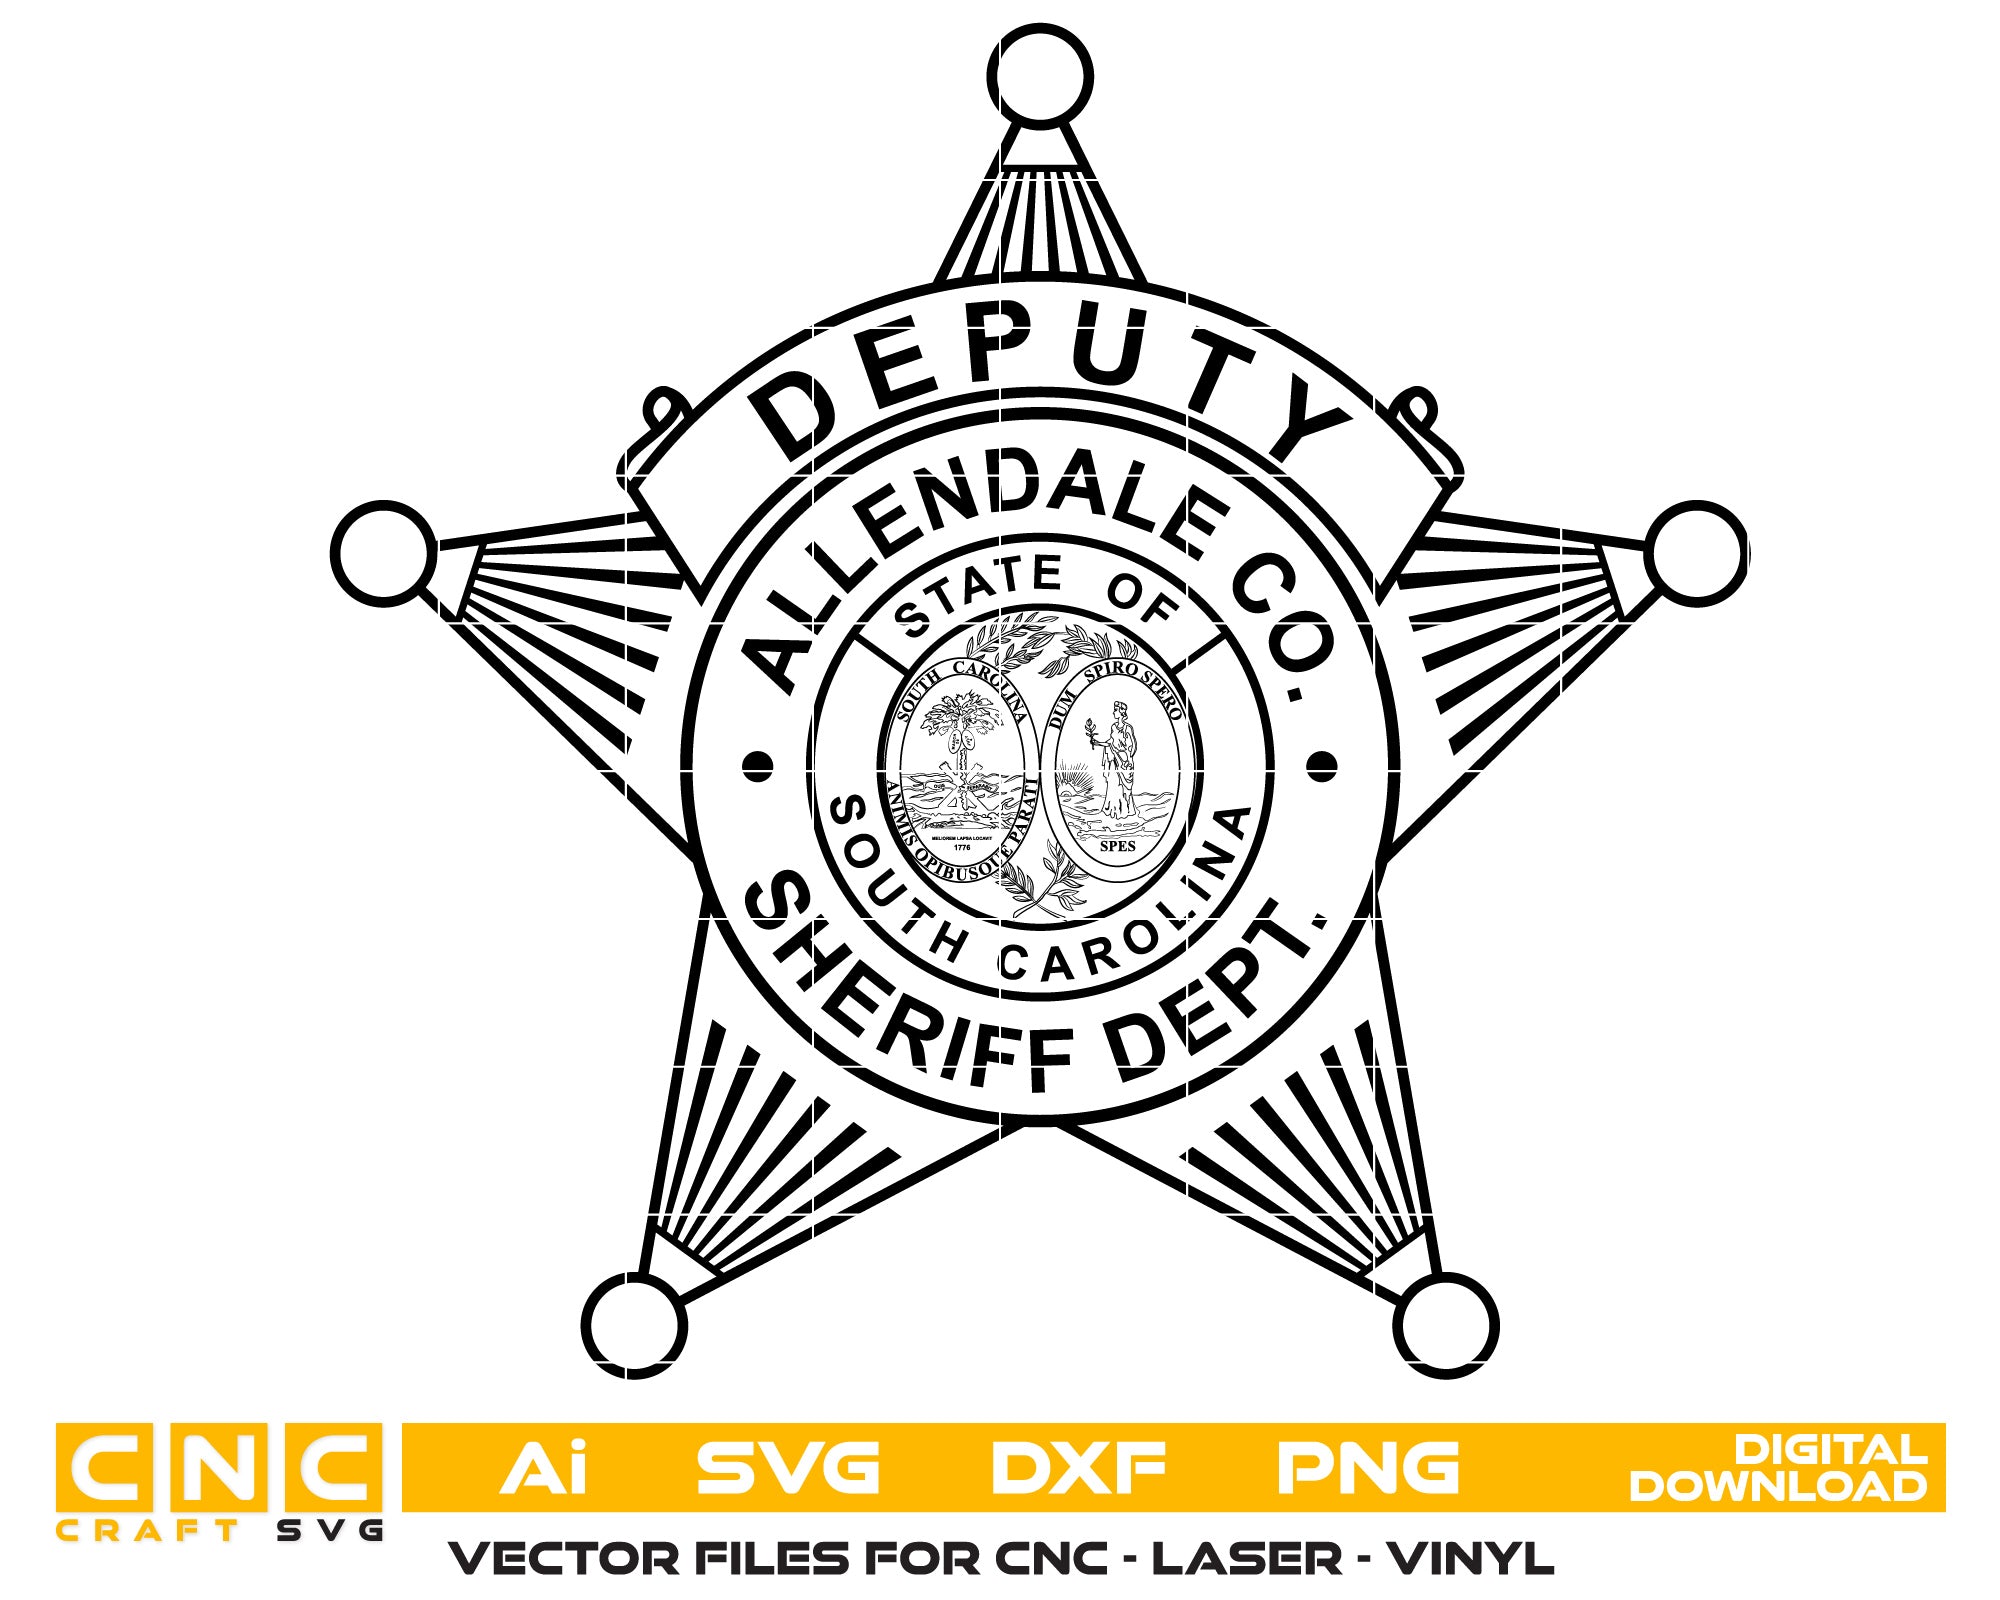 Allendale Co sheriff dept badge vector art